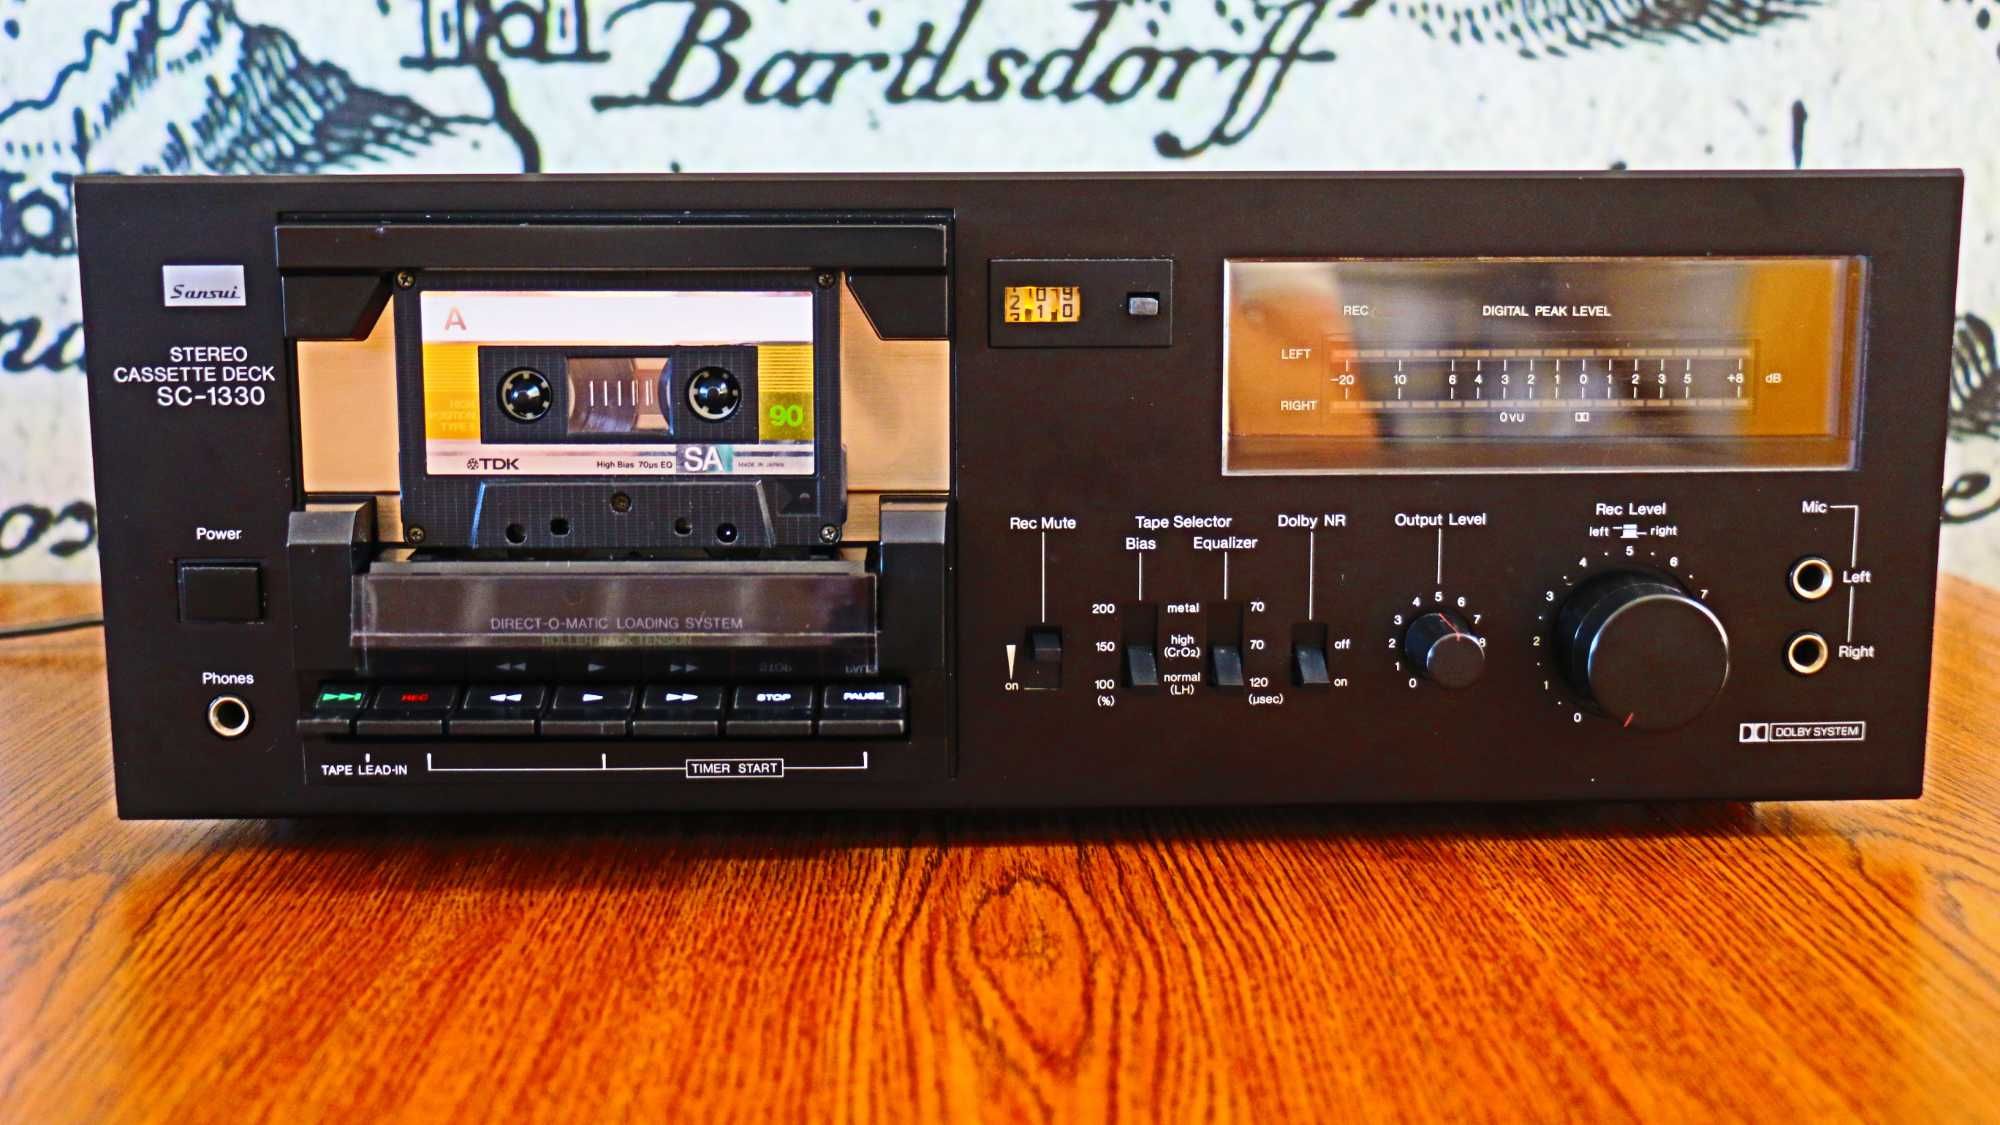 Magnetofon kasetowy Sansui SC-1330 Stereo Cassette Deck 1980